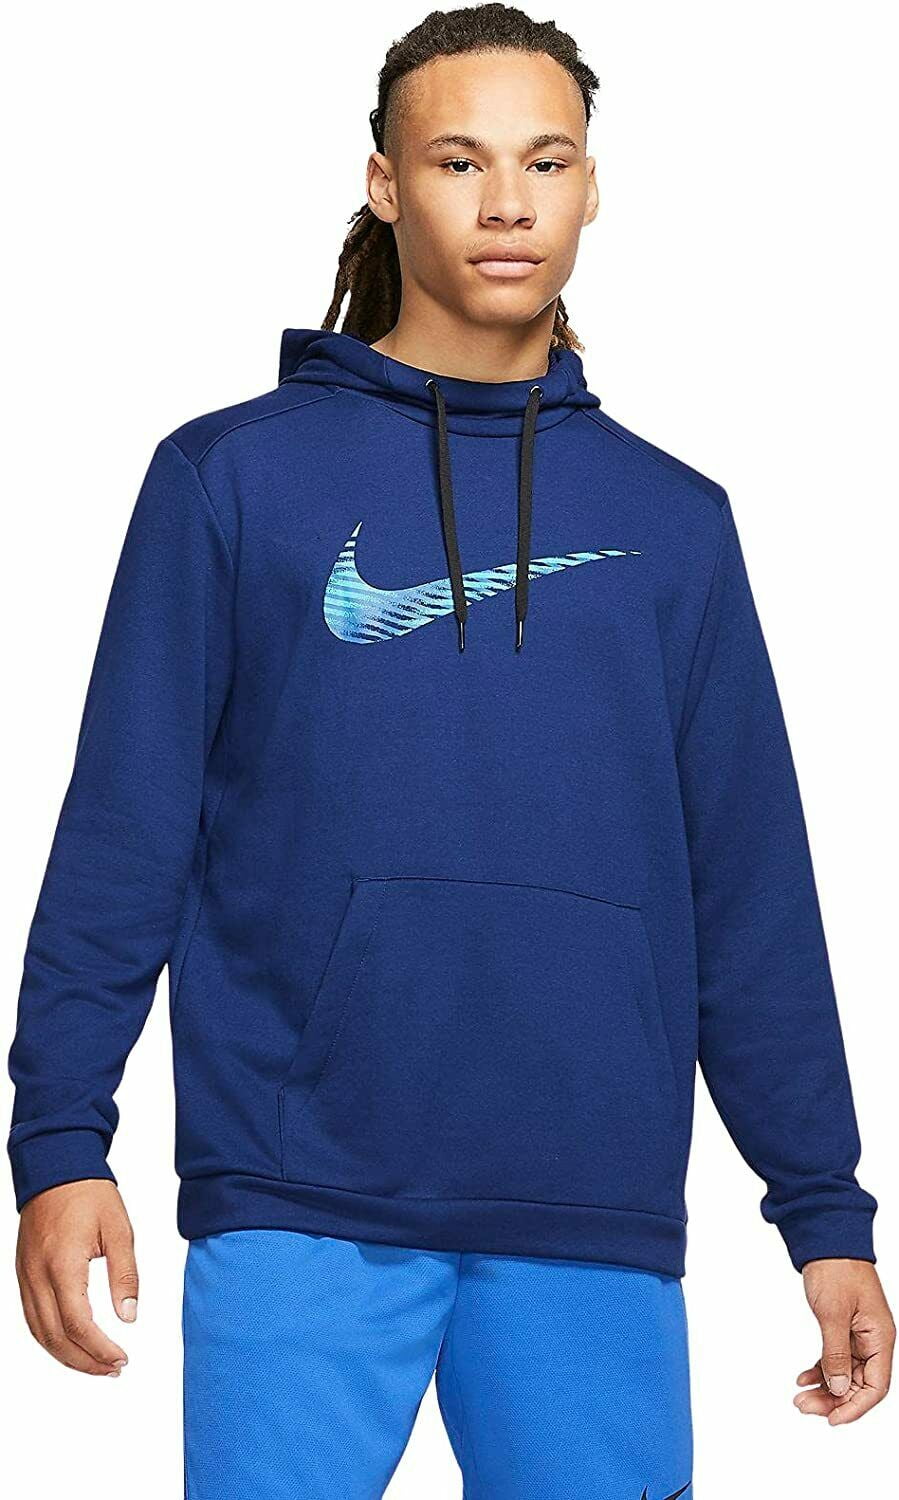 Nike Dri-FIT Blue Void Pullover Training Hoodie Size M - Walmart.com